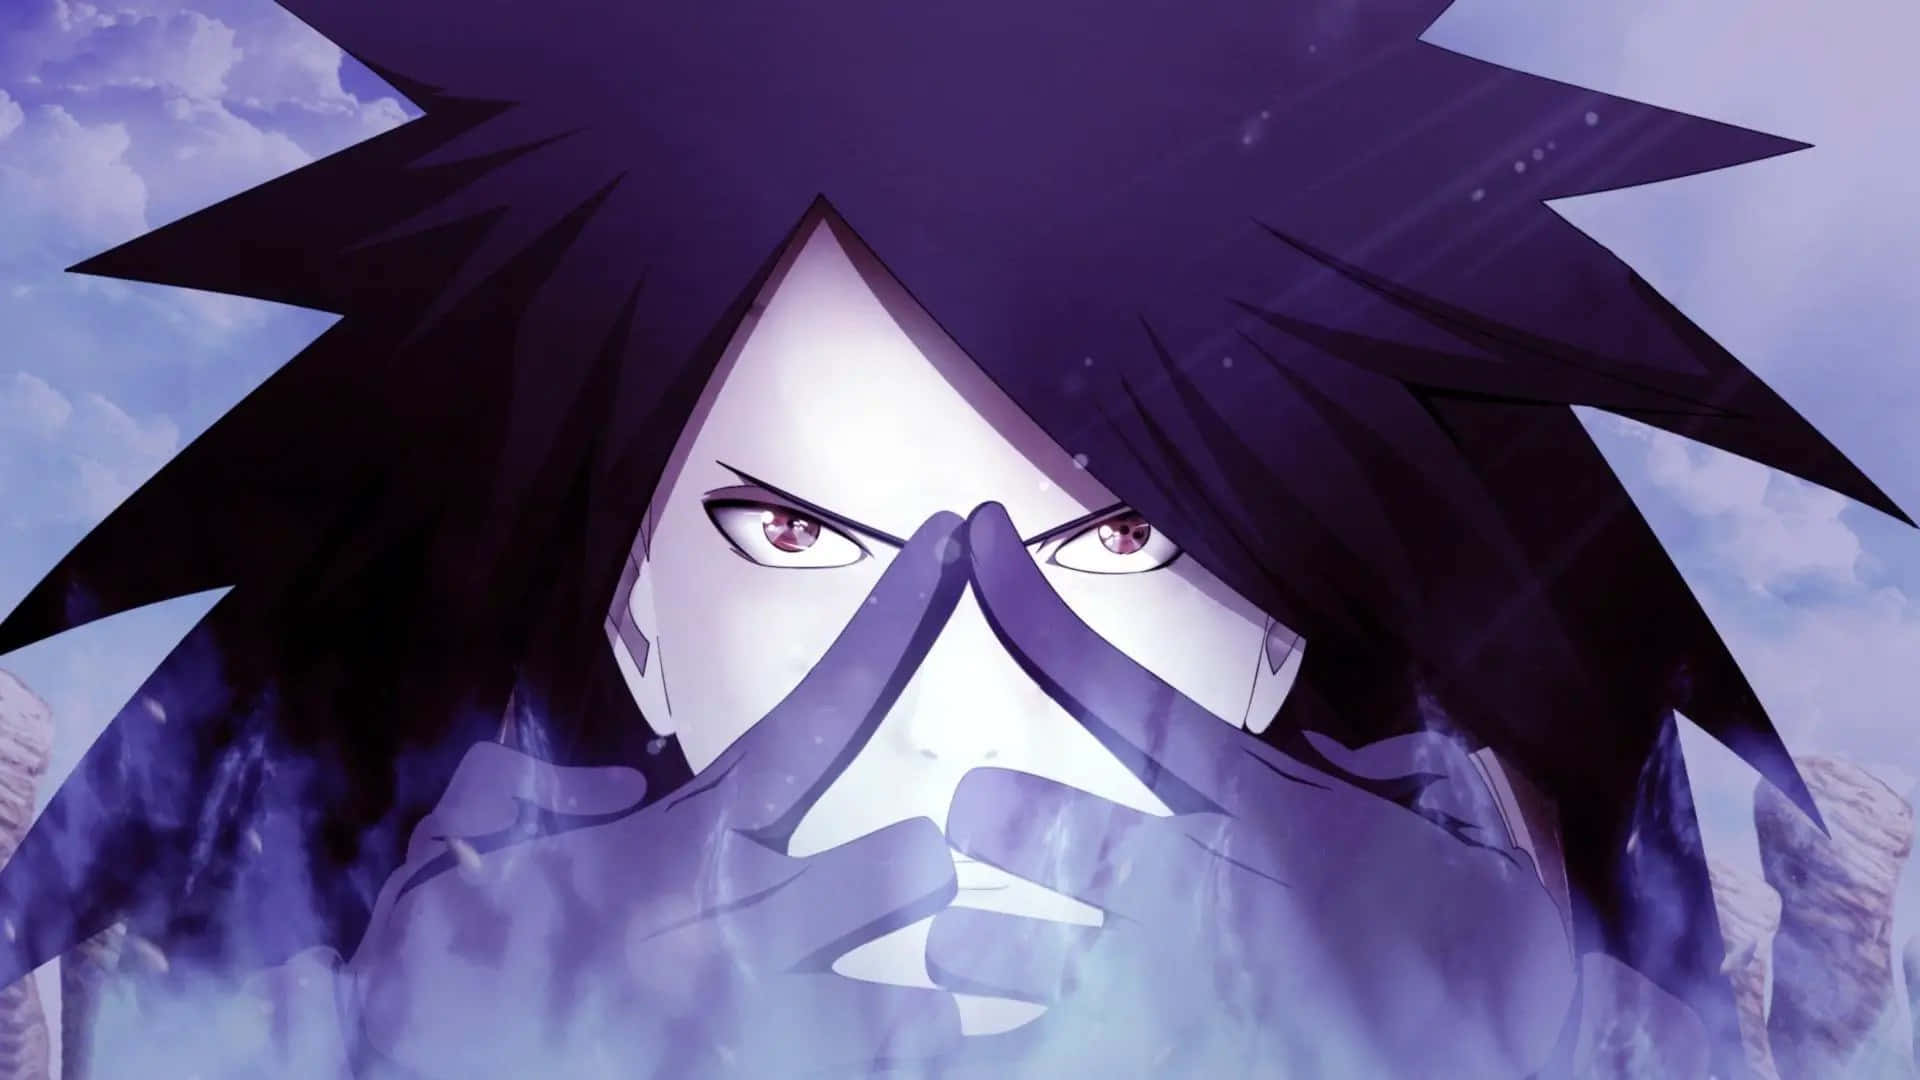 "Madara Uchiha, leader of the Uchiha Clan and one of the strongest ninja warriors in the world of Naruto."